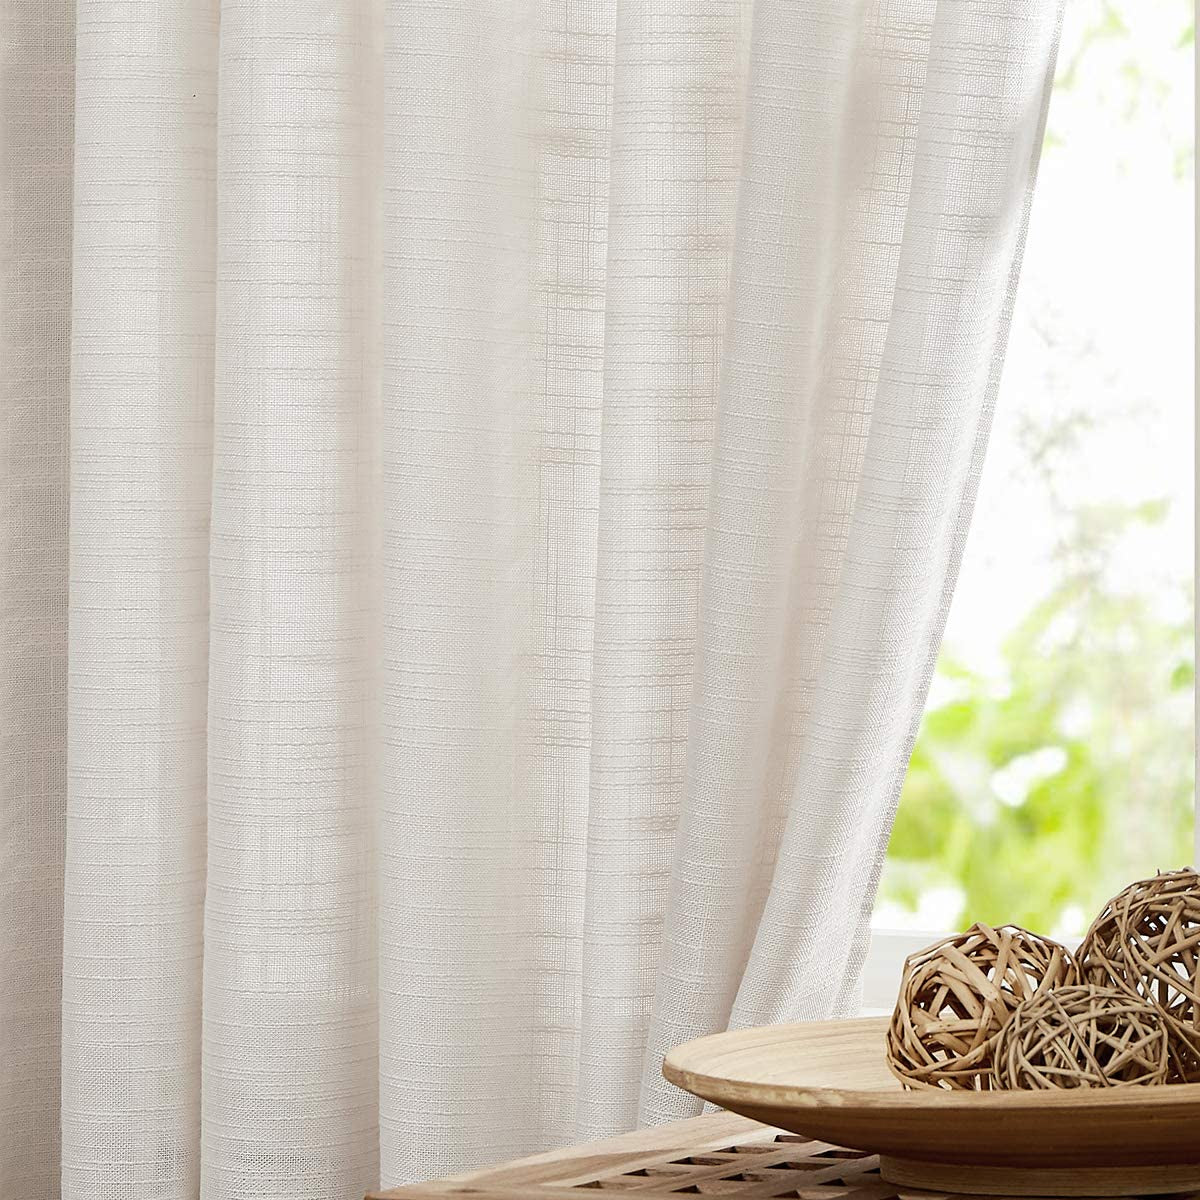 FMFUNCTEX Natural Semi-Sheer Curtains for Living Room Rich Linen Textured Look Window Curtain Draperies 52”W X63”L 2 Panels Grommet Top  Fmfunctex Natural (Linen Look) 52" X 96" 2Pcs 